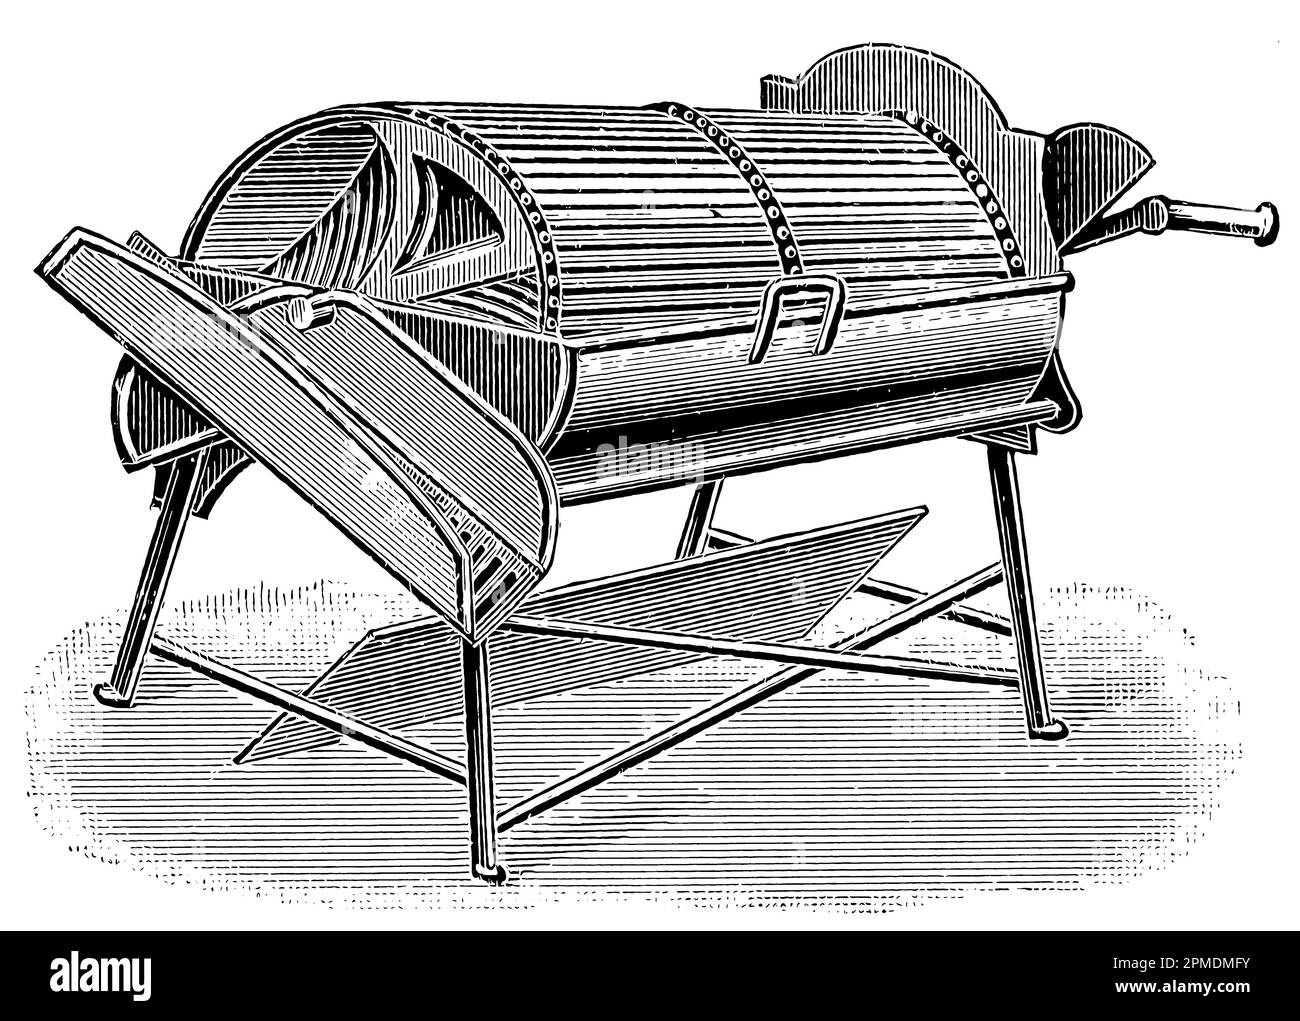 Potato and beet washing machine. Publication of the book 'Meyers Konversations-Lexikon', Volume 2, Leipzig, Germany, 1910 Stock Photo